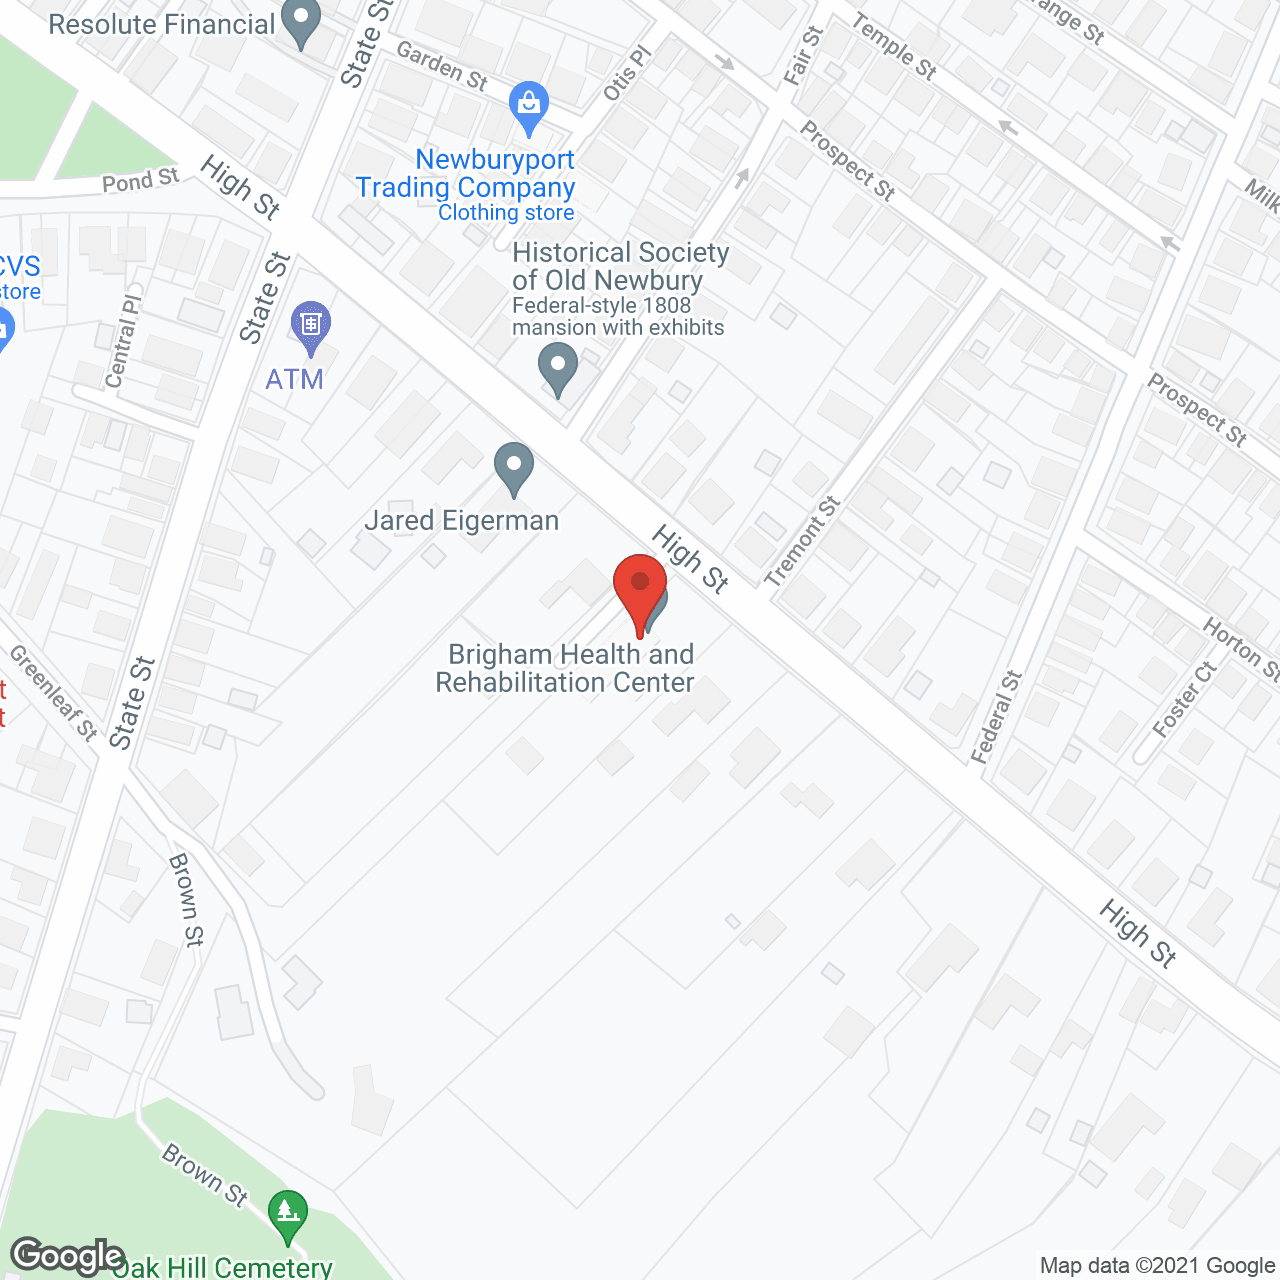 Brigham Manor Nursing and Rehabilitation Center in google map